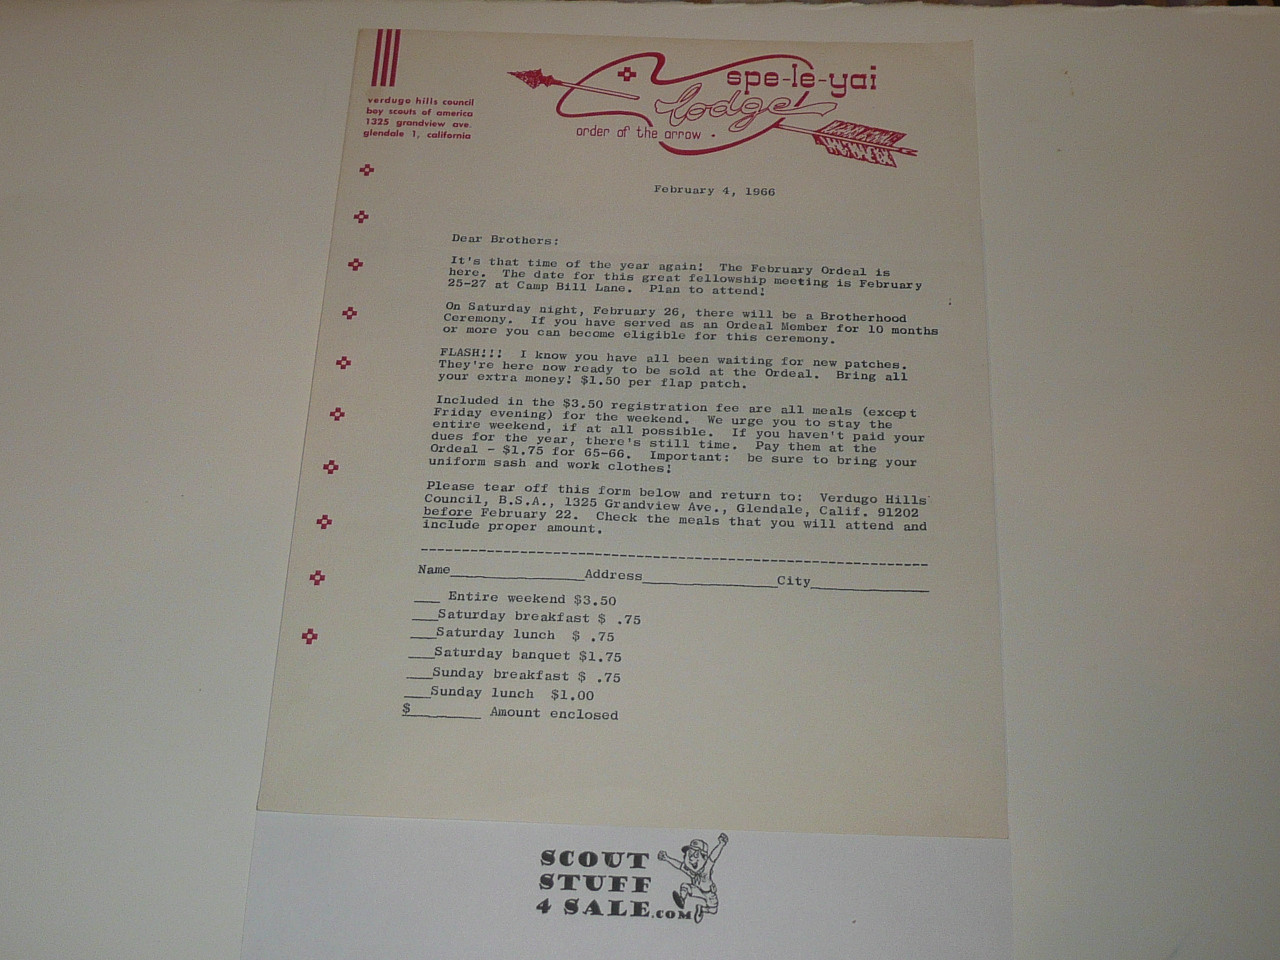 1966 Order of the Arrow Lodge #249 Spe-Le-Yai Ordeal Invitation on Lodge Stationary